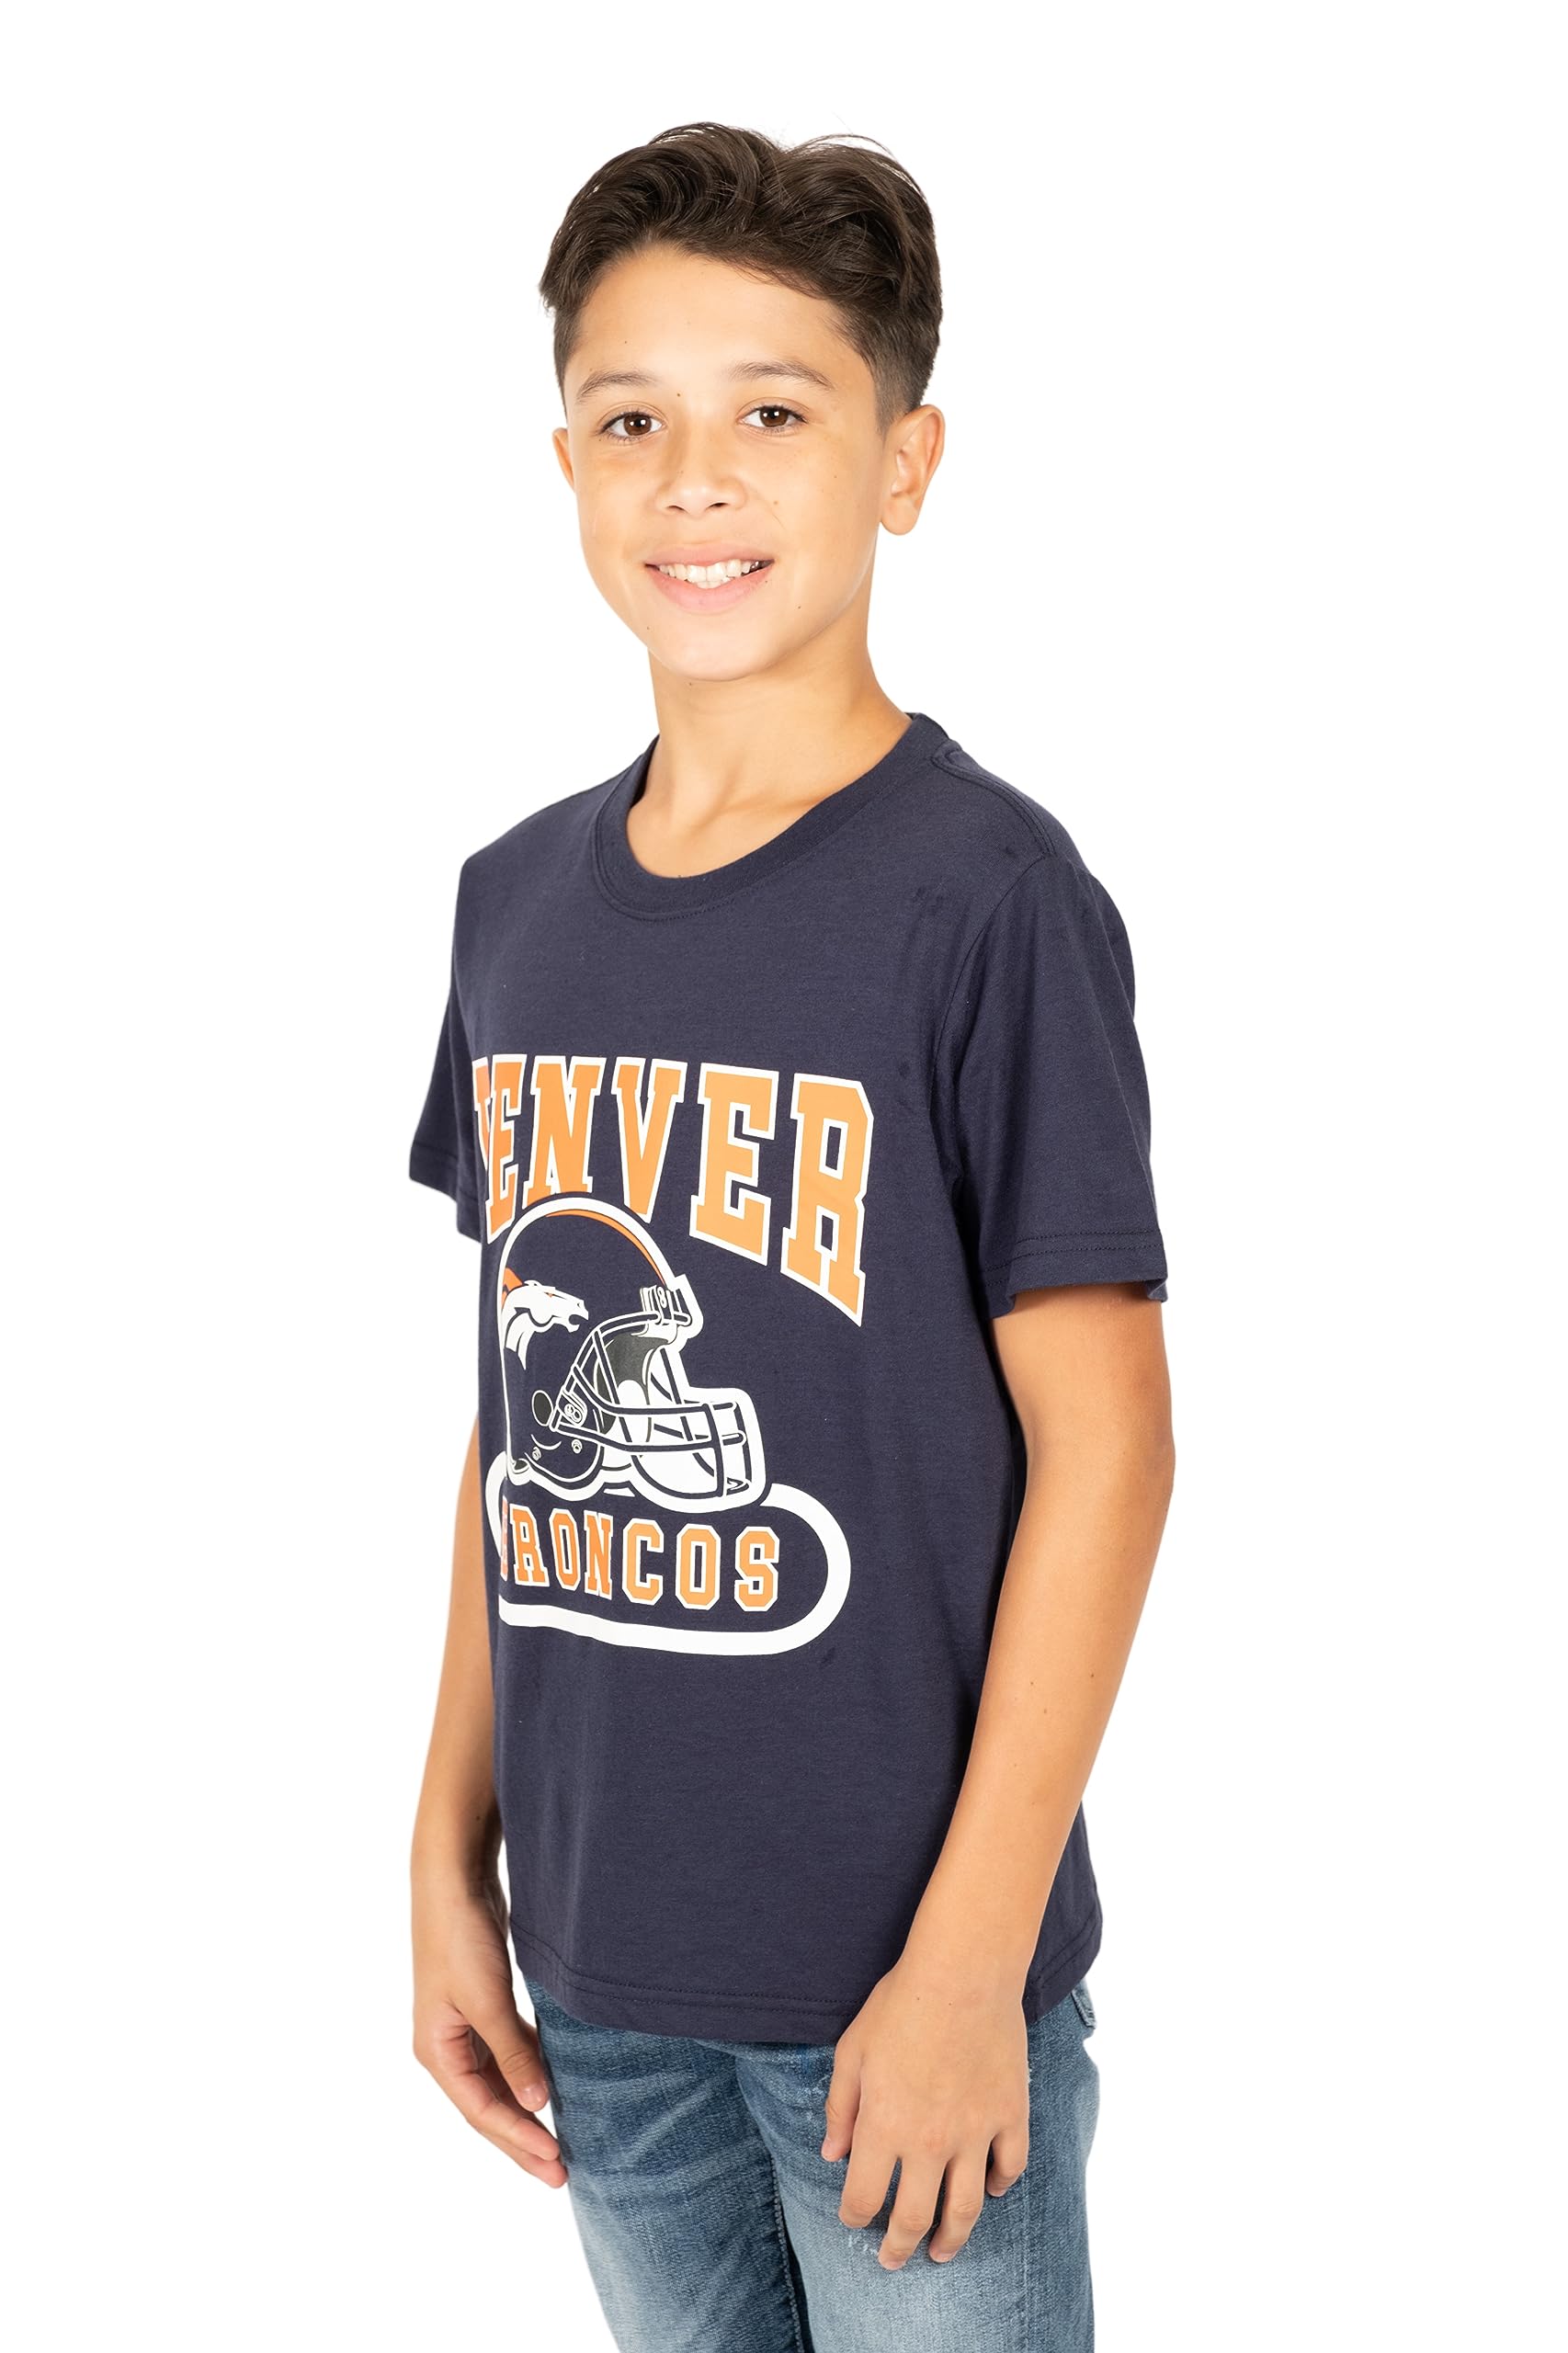 Ultra Game NFL Denver Broncos Youth Super Soft Game Day Crew Neck T-Shirt|Denver Broncos